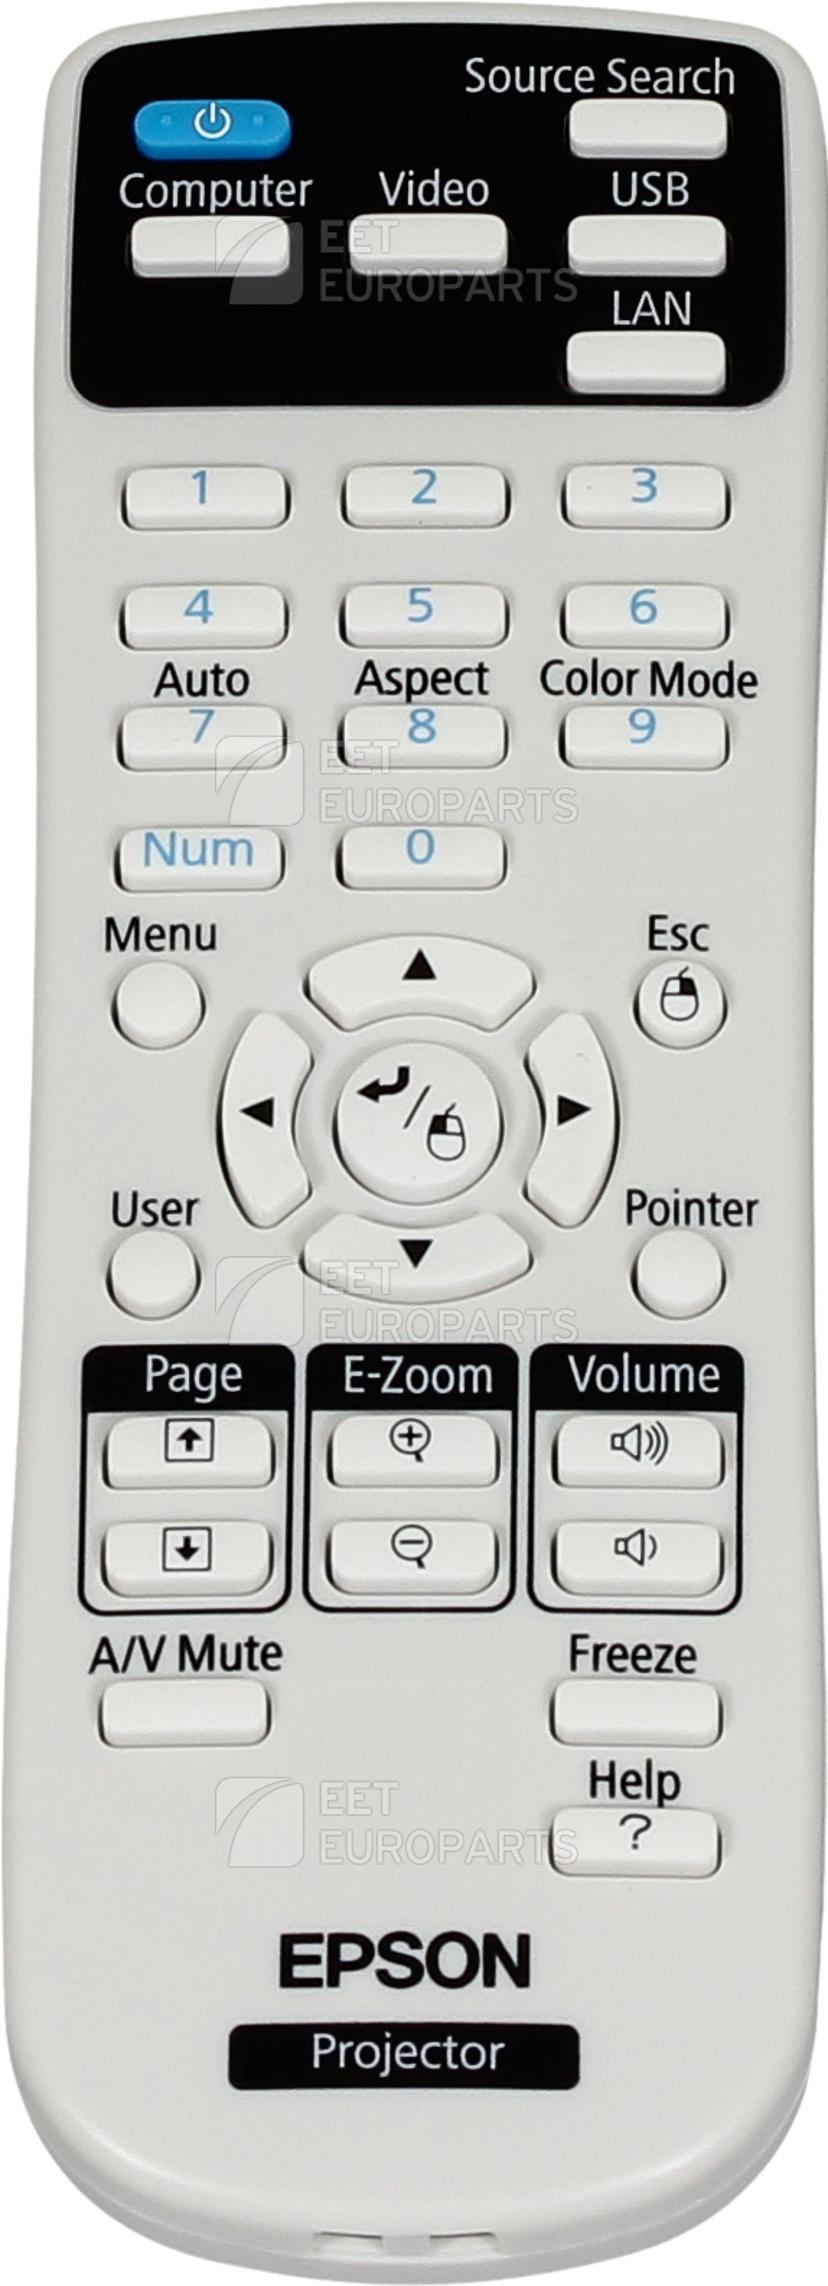 Epson Projector remote control